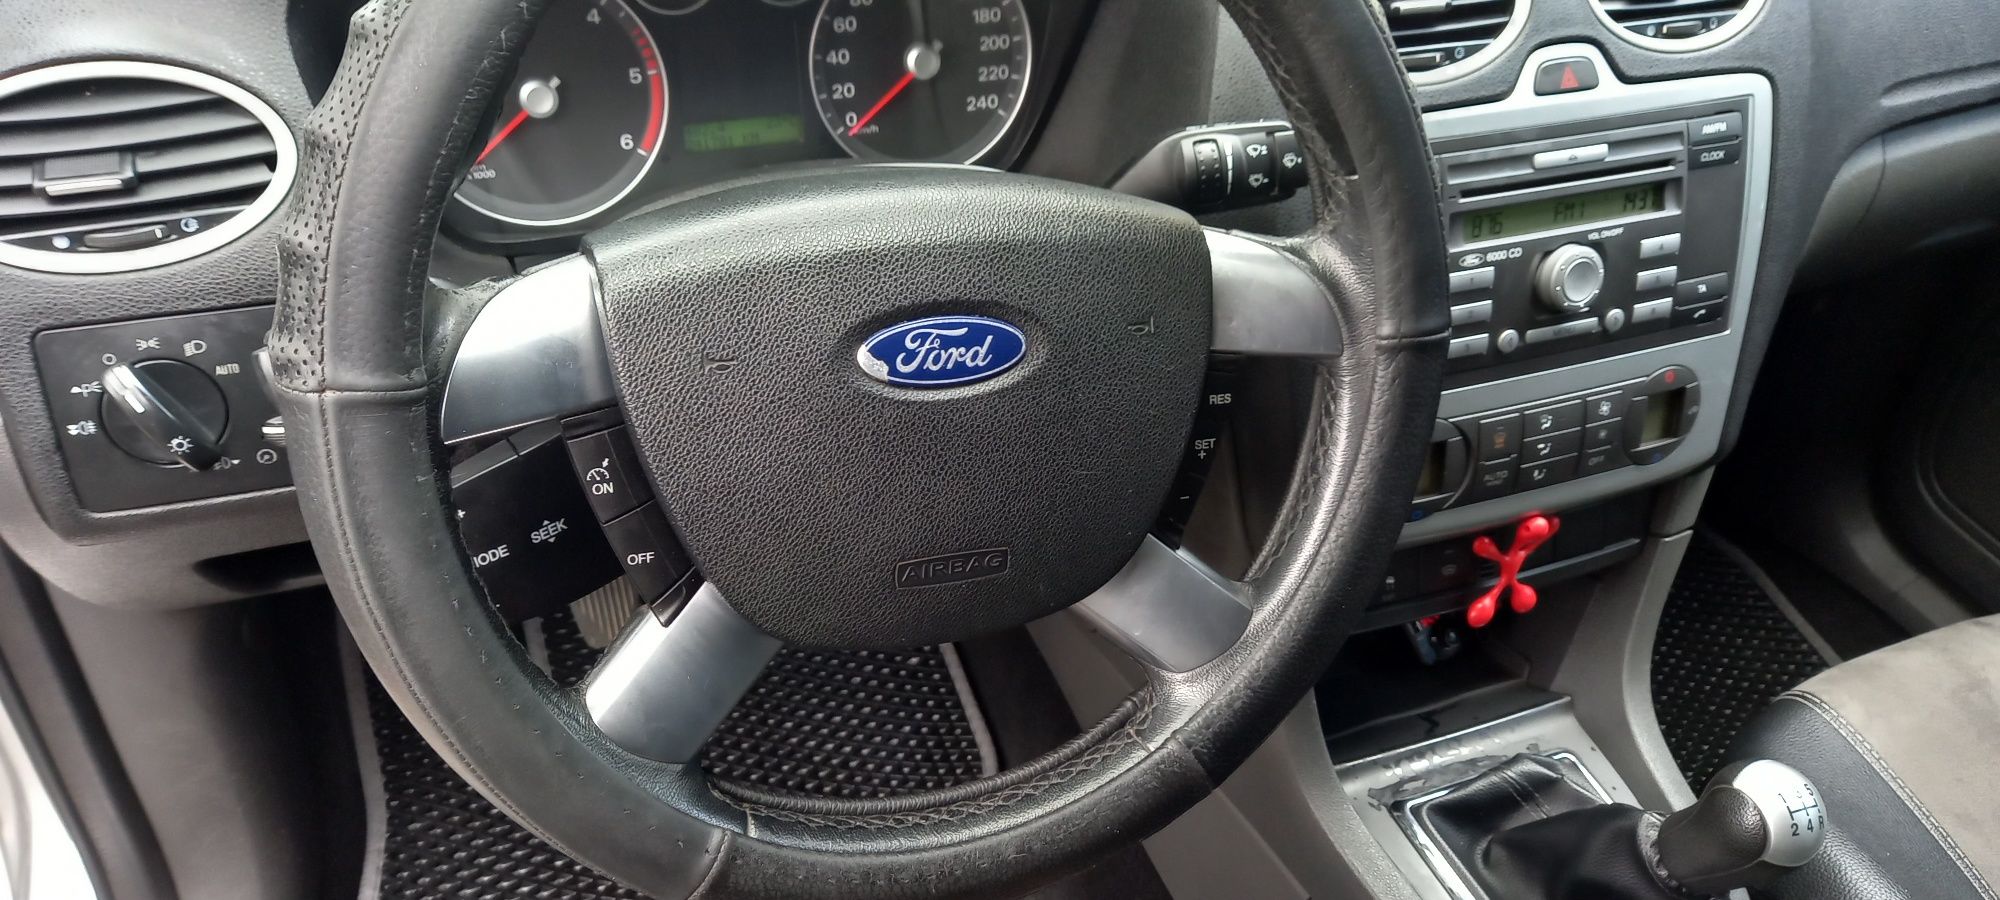 Ford Focus 2 1.6 дизель